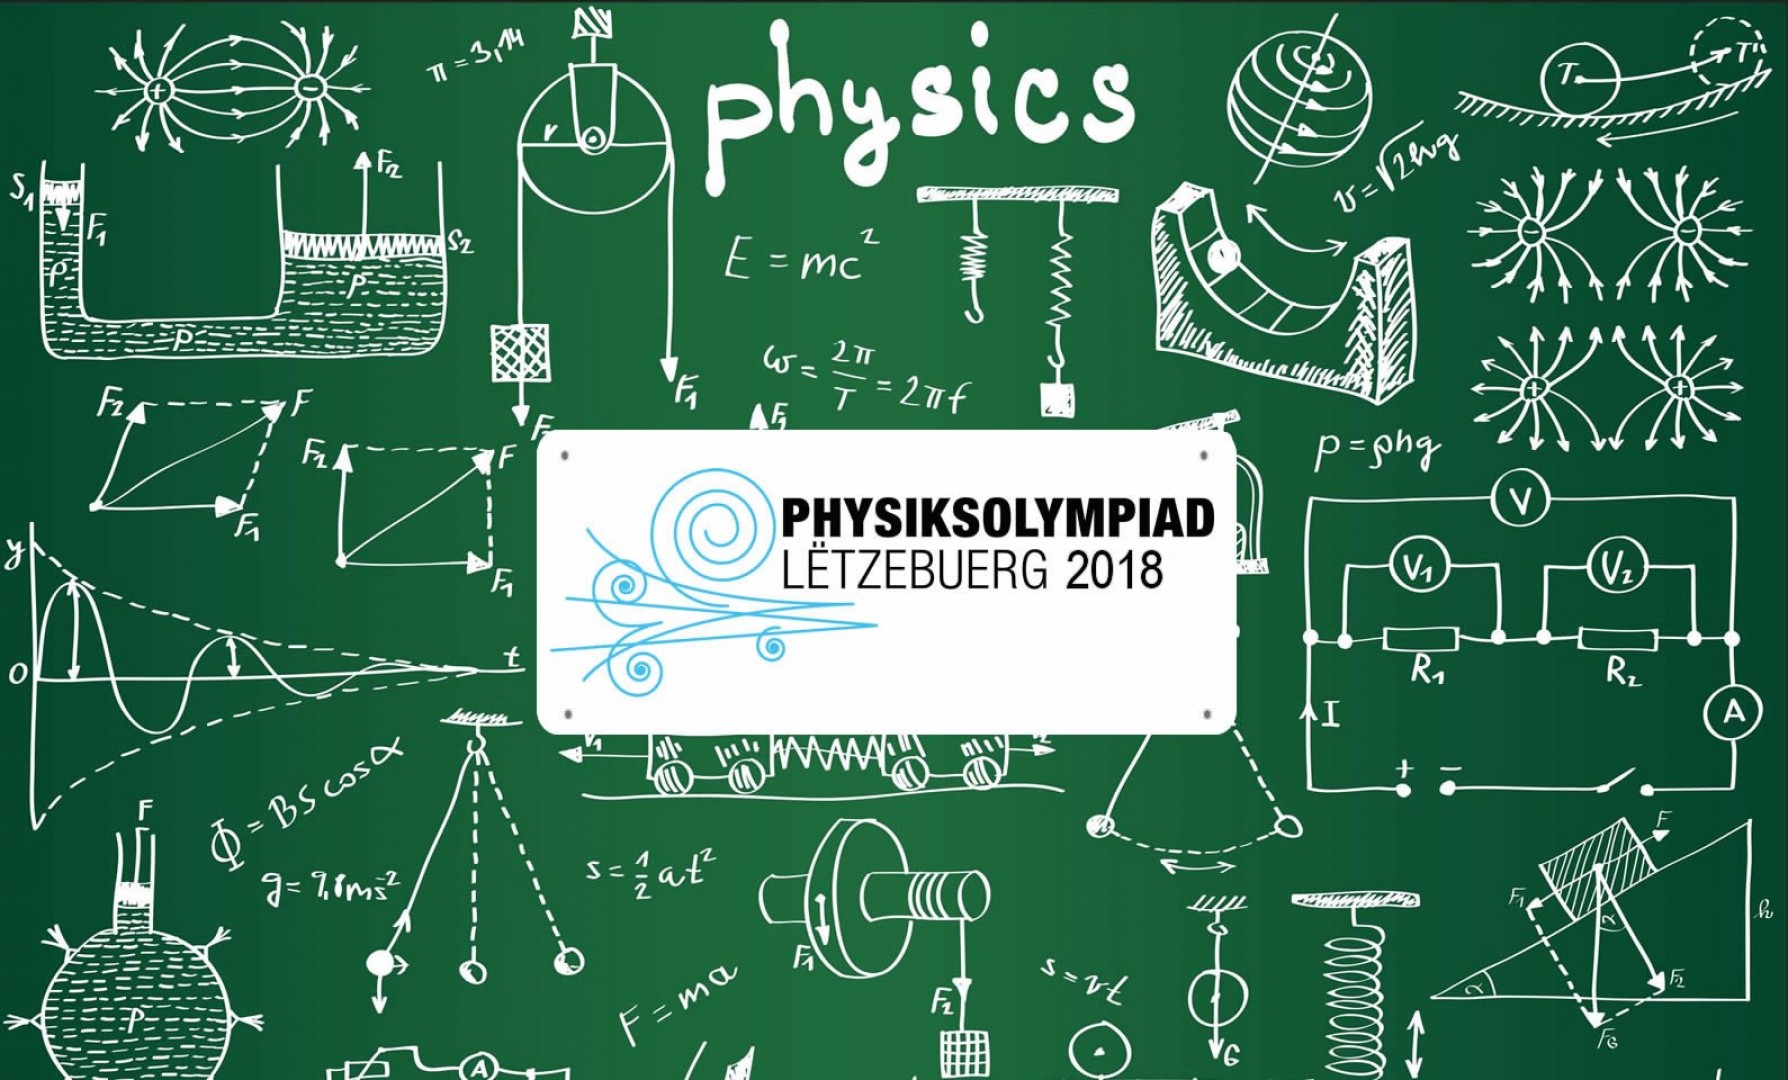 Physiksolympiad